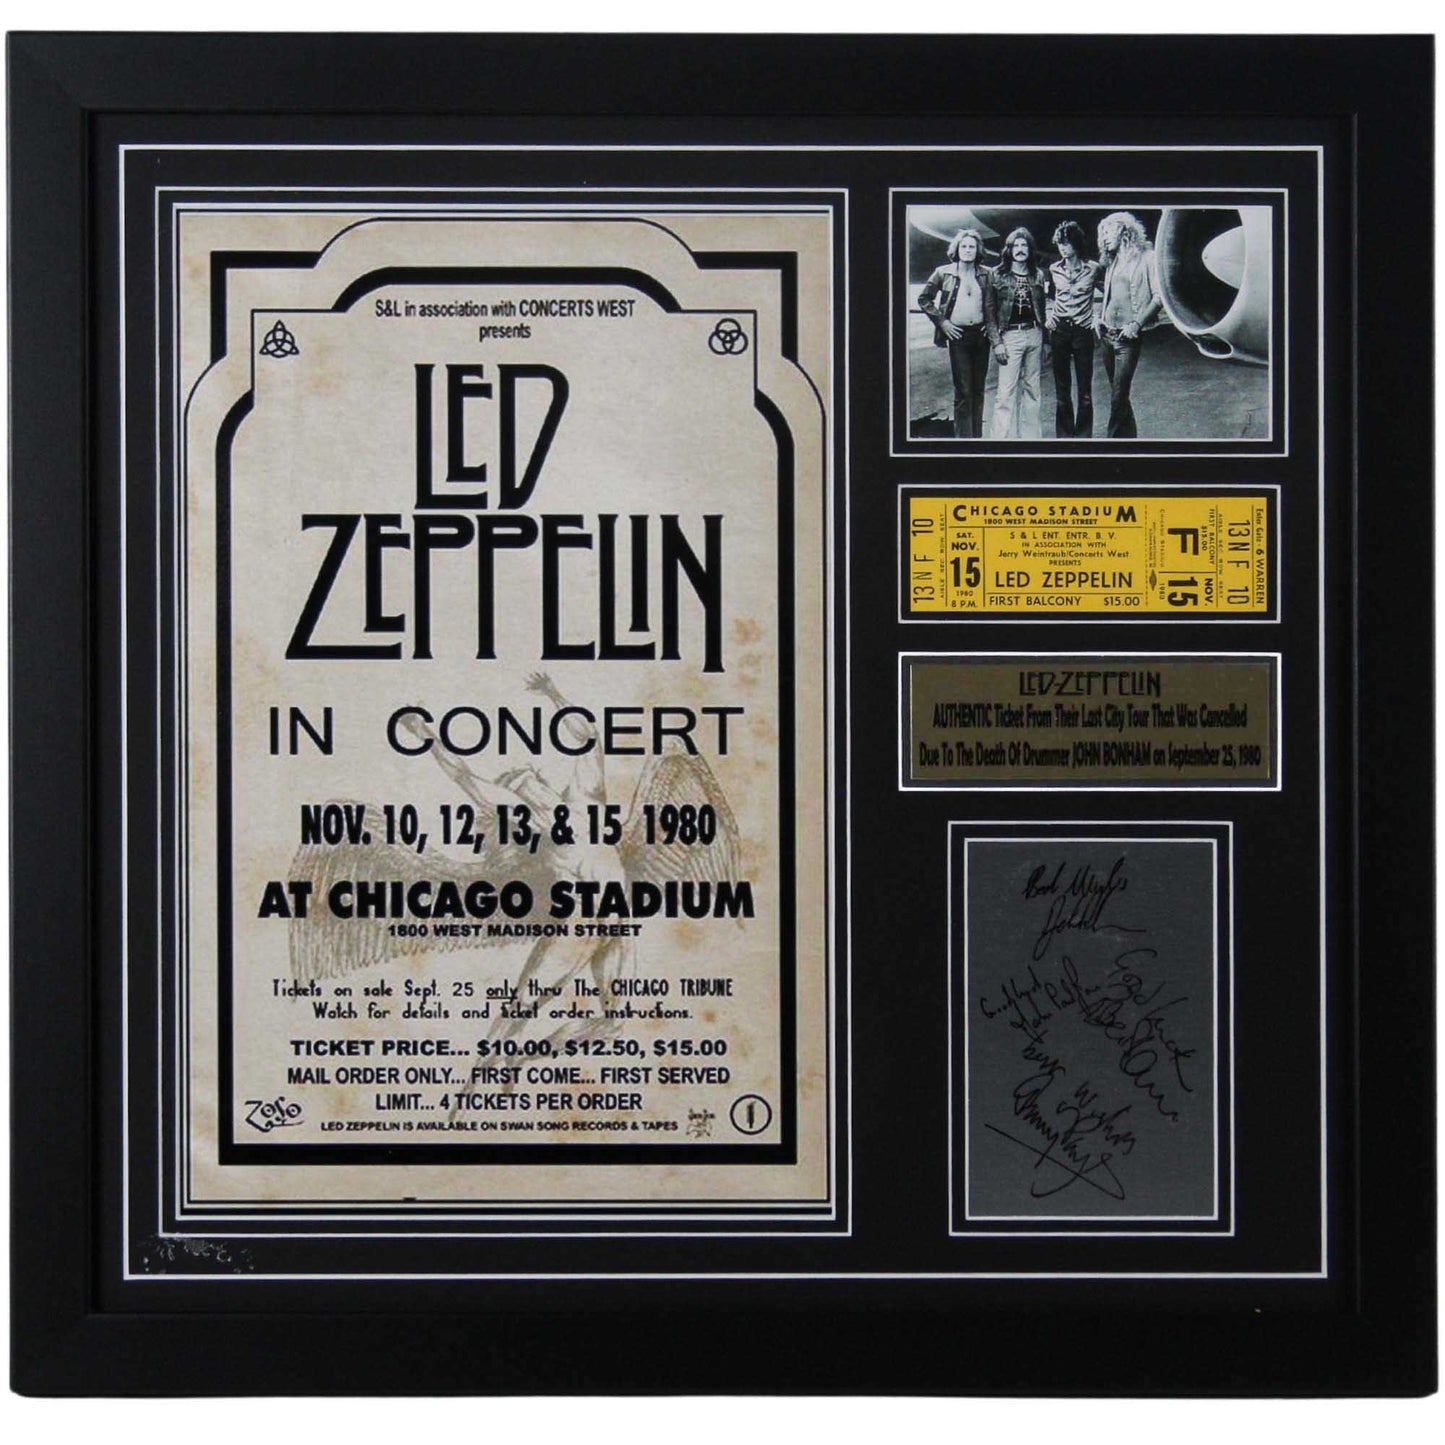 Led Zeppelin Cancelled Show Ticket Memorabilia